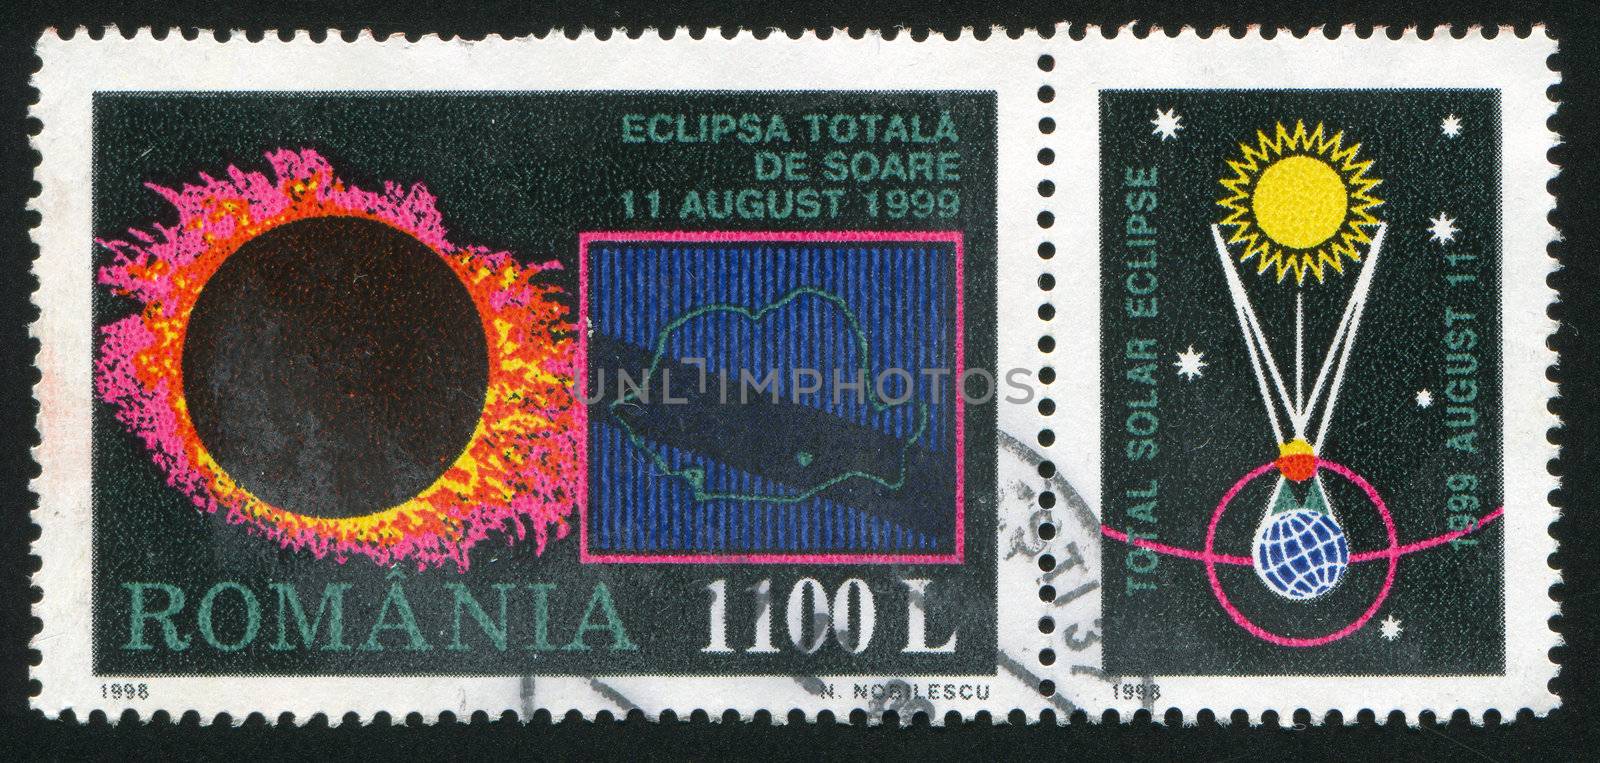 ROMANIA - CIRCA 1998: stamp printed by Romania, shows Total Eclipse of the Sun,  circa 1998